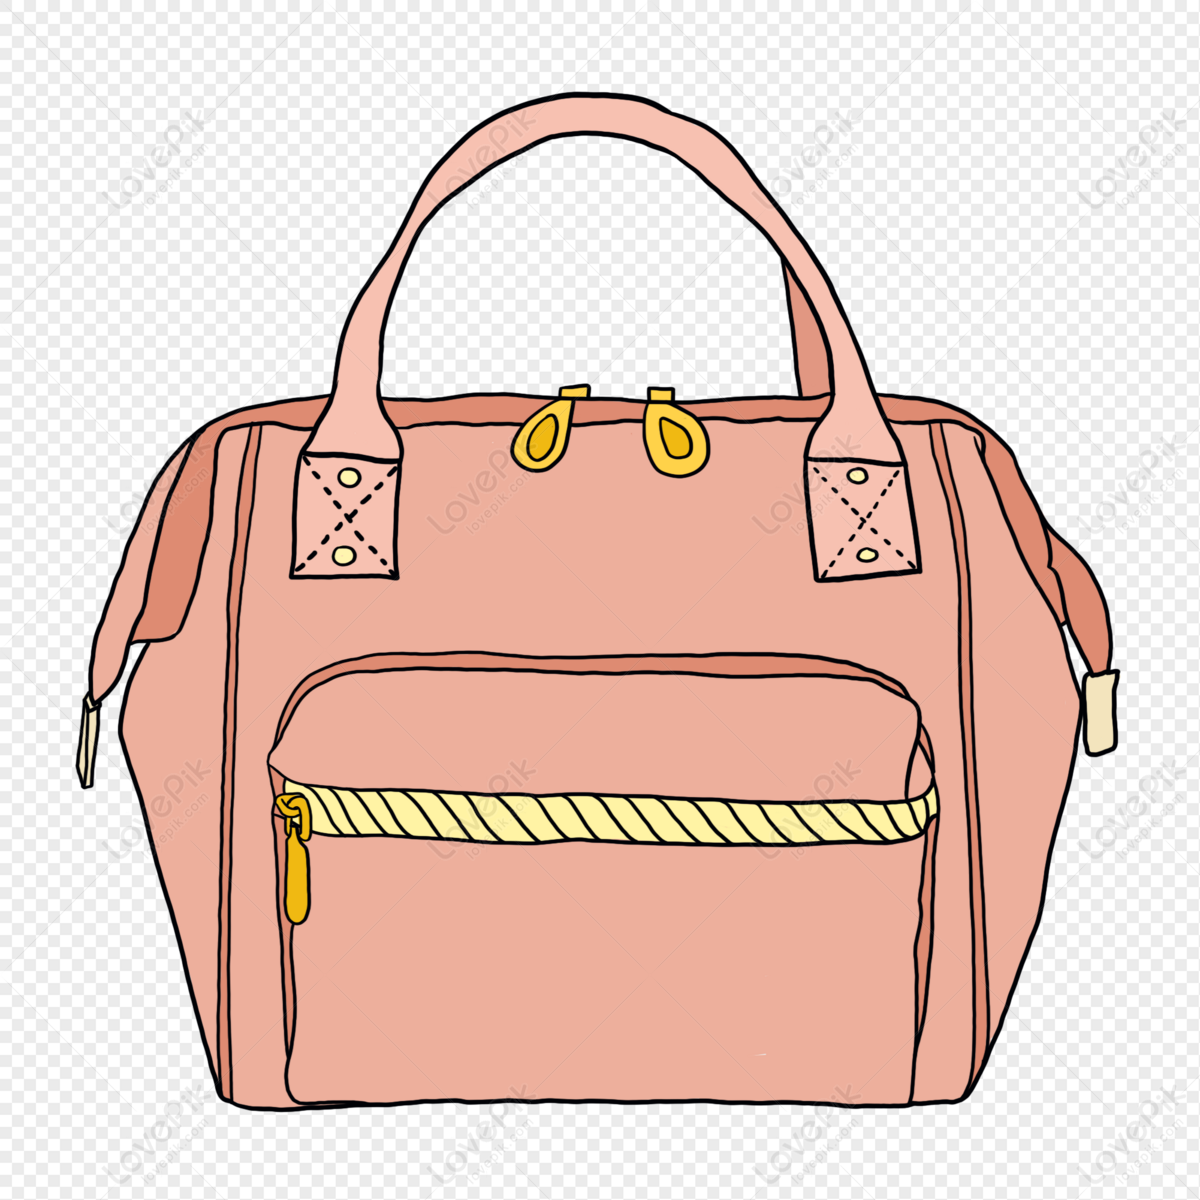 Pink Money Bag Clipart Hd PNG, Beautiful Bag Illustration Ladies Handbag  Ladies Bag Pink Bag, Pink, Bag, Lady Bags PNG Image For Free Download